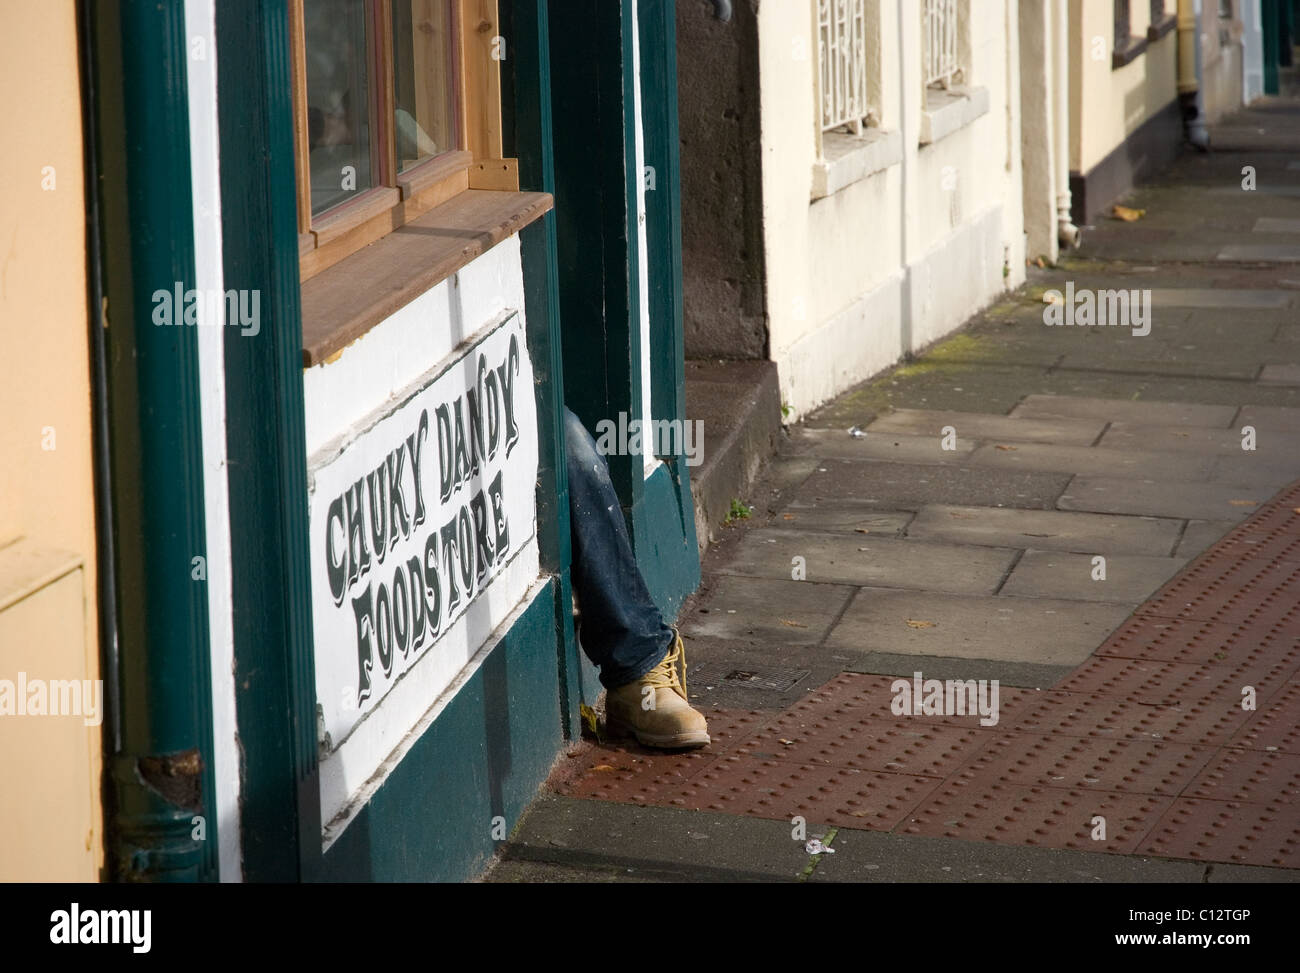 Man sitting on shop step, Cork, Ireland Stock Photo